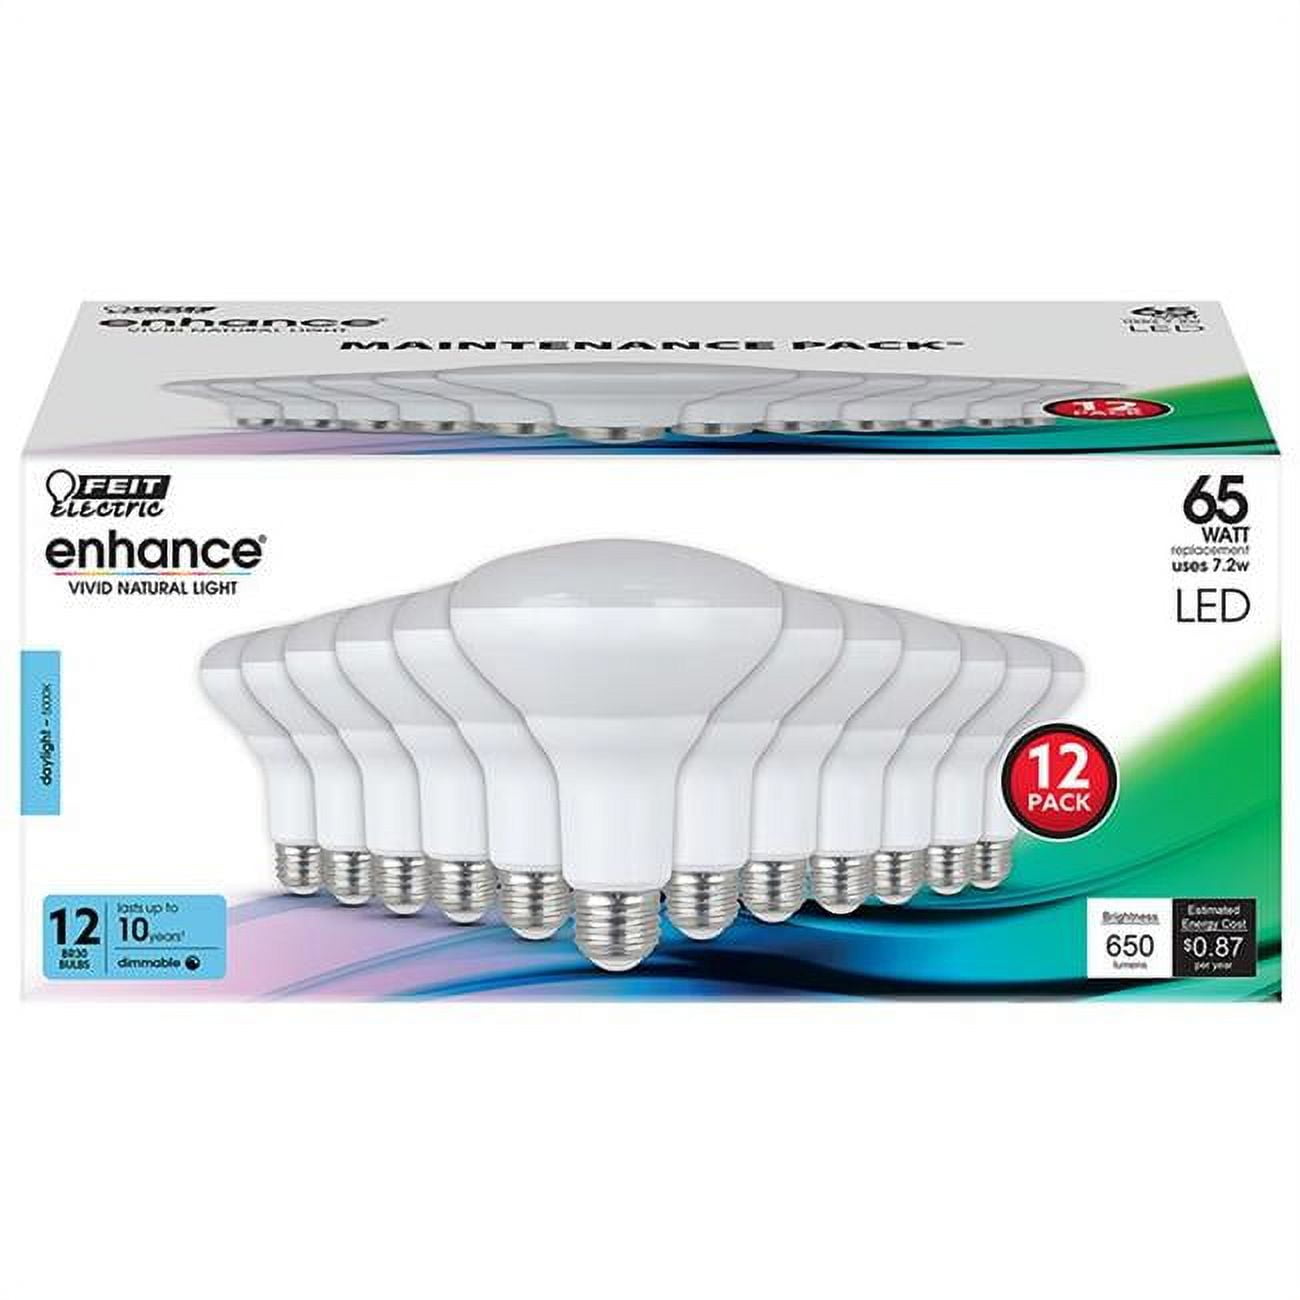 3929429 65 Watt Equivalence Enhance 7.2 Watt 650 Lumen Track & Recessed Br30 Led Bulb, Daylight - Pack Of 12